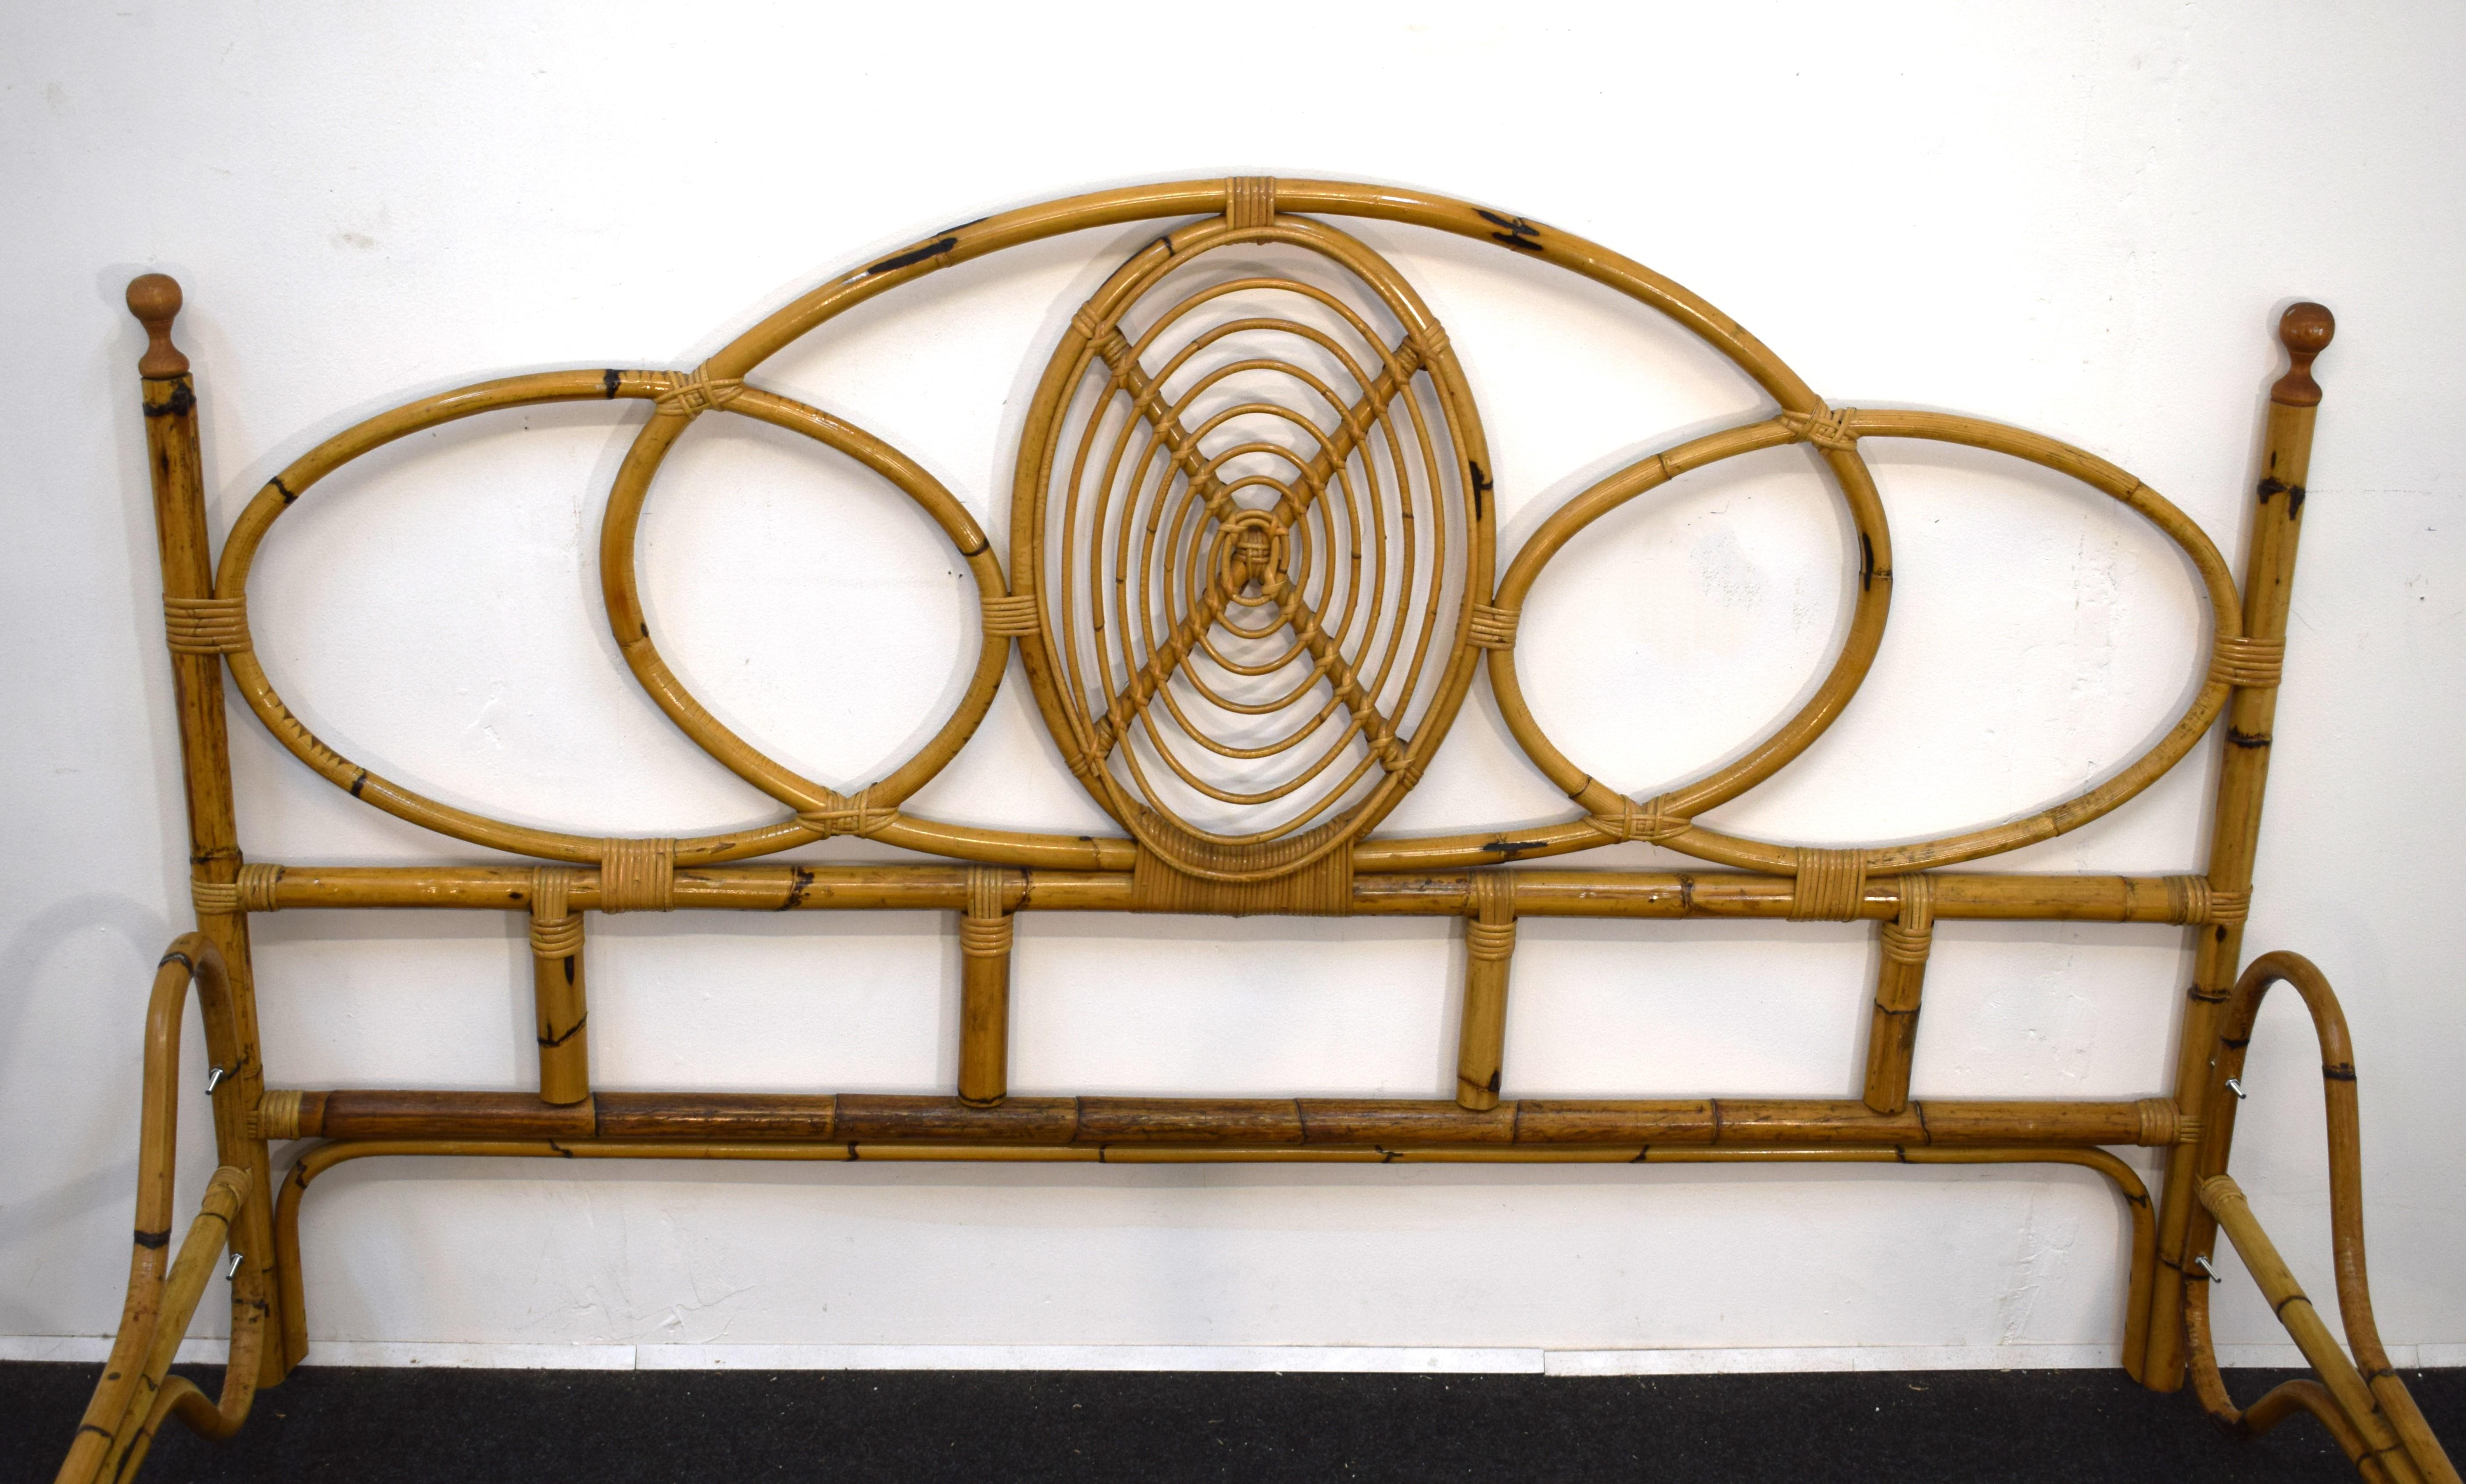 Italian design mid-century bamboo bed, 1960s.
External dimensions : H=97 cm; W= 170 cm; D=200 cm.
Internal measures for mattress: 193cm x 163 cm.

 